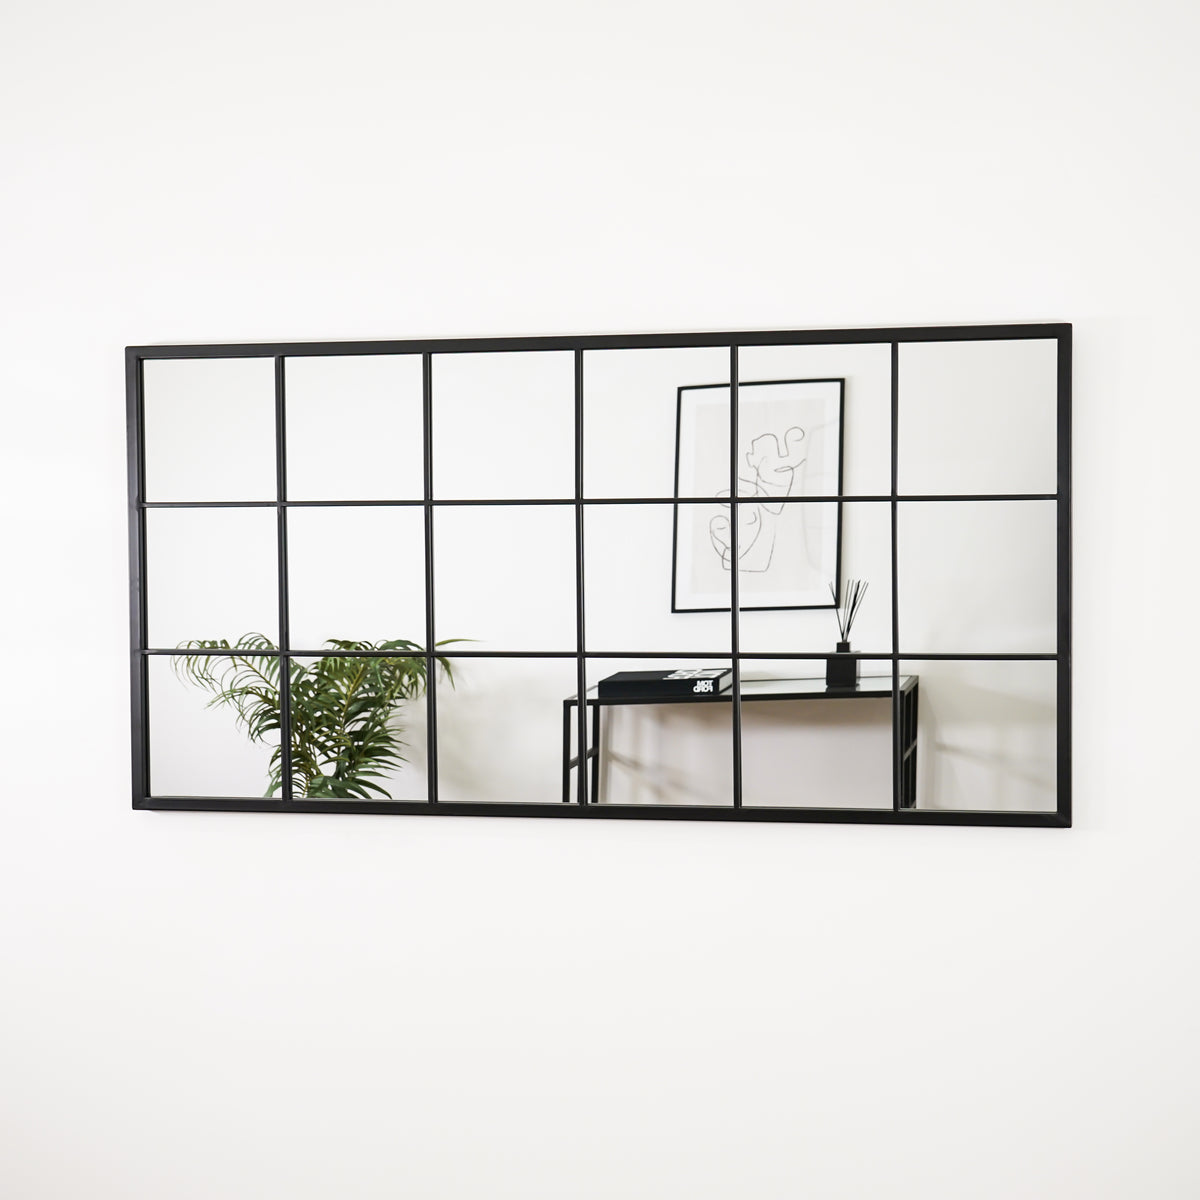 Brooklyn - Grand miroir de fenêtre industriel en métal noir 140 cm x 70 cm